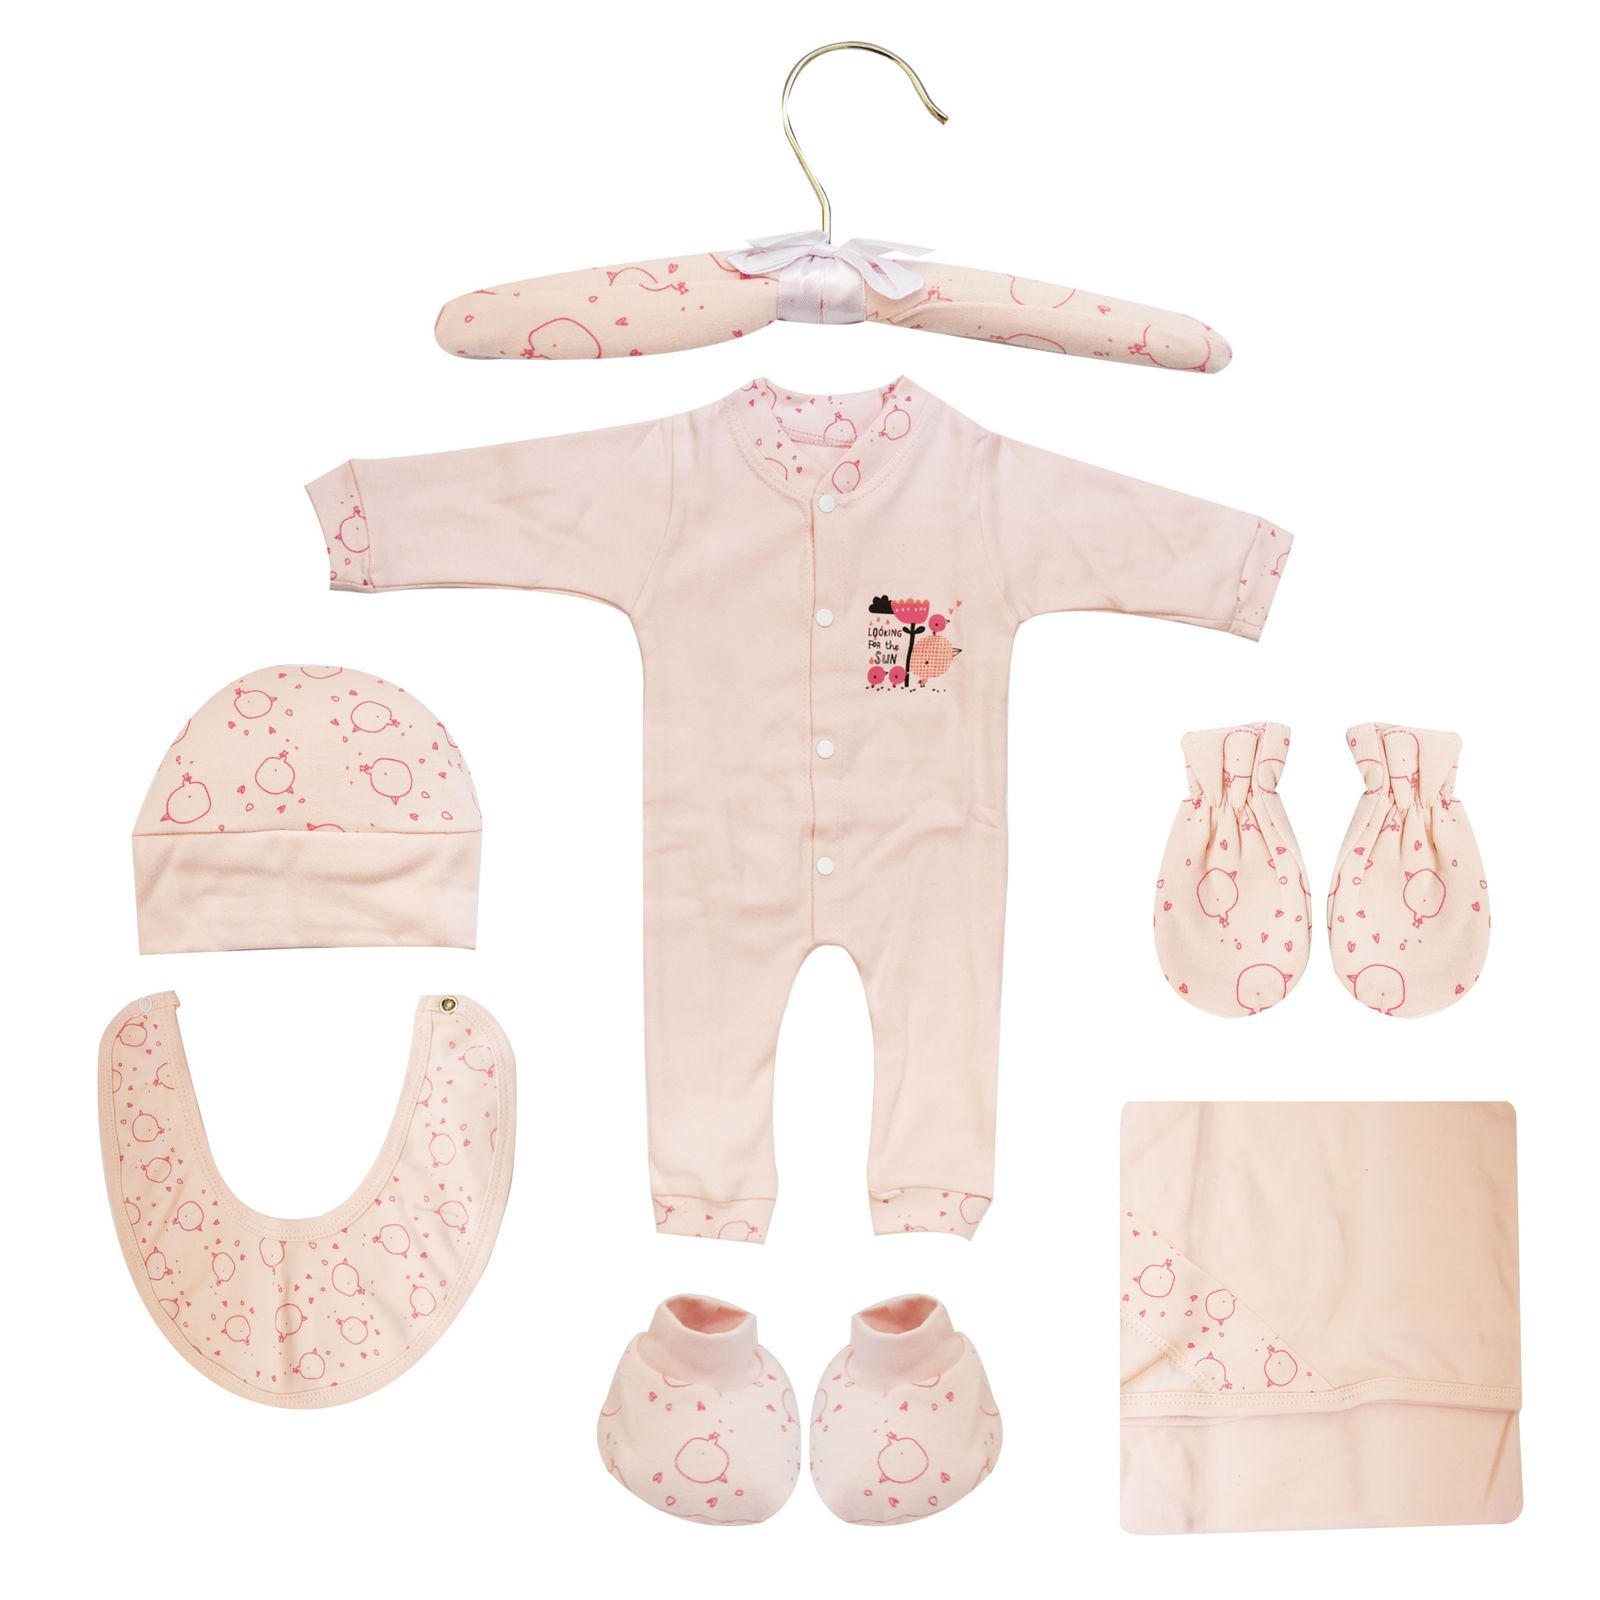 ست 7 تکه لباس نوزادی مادرکر طرح بلبل کد M454.5 -  - 7